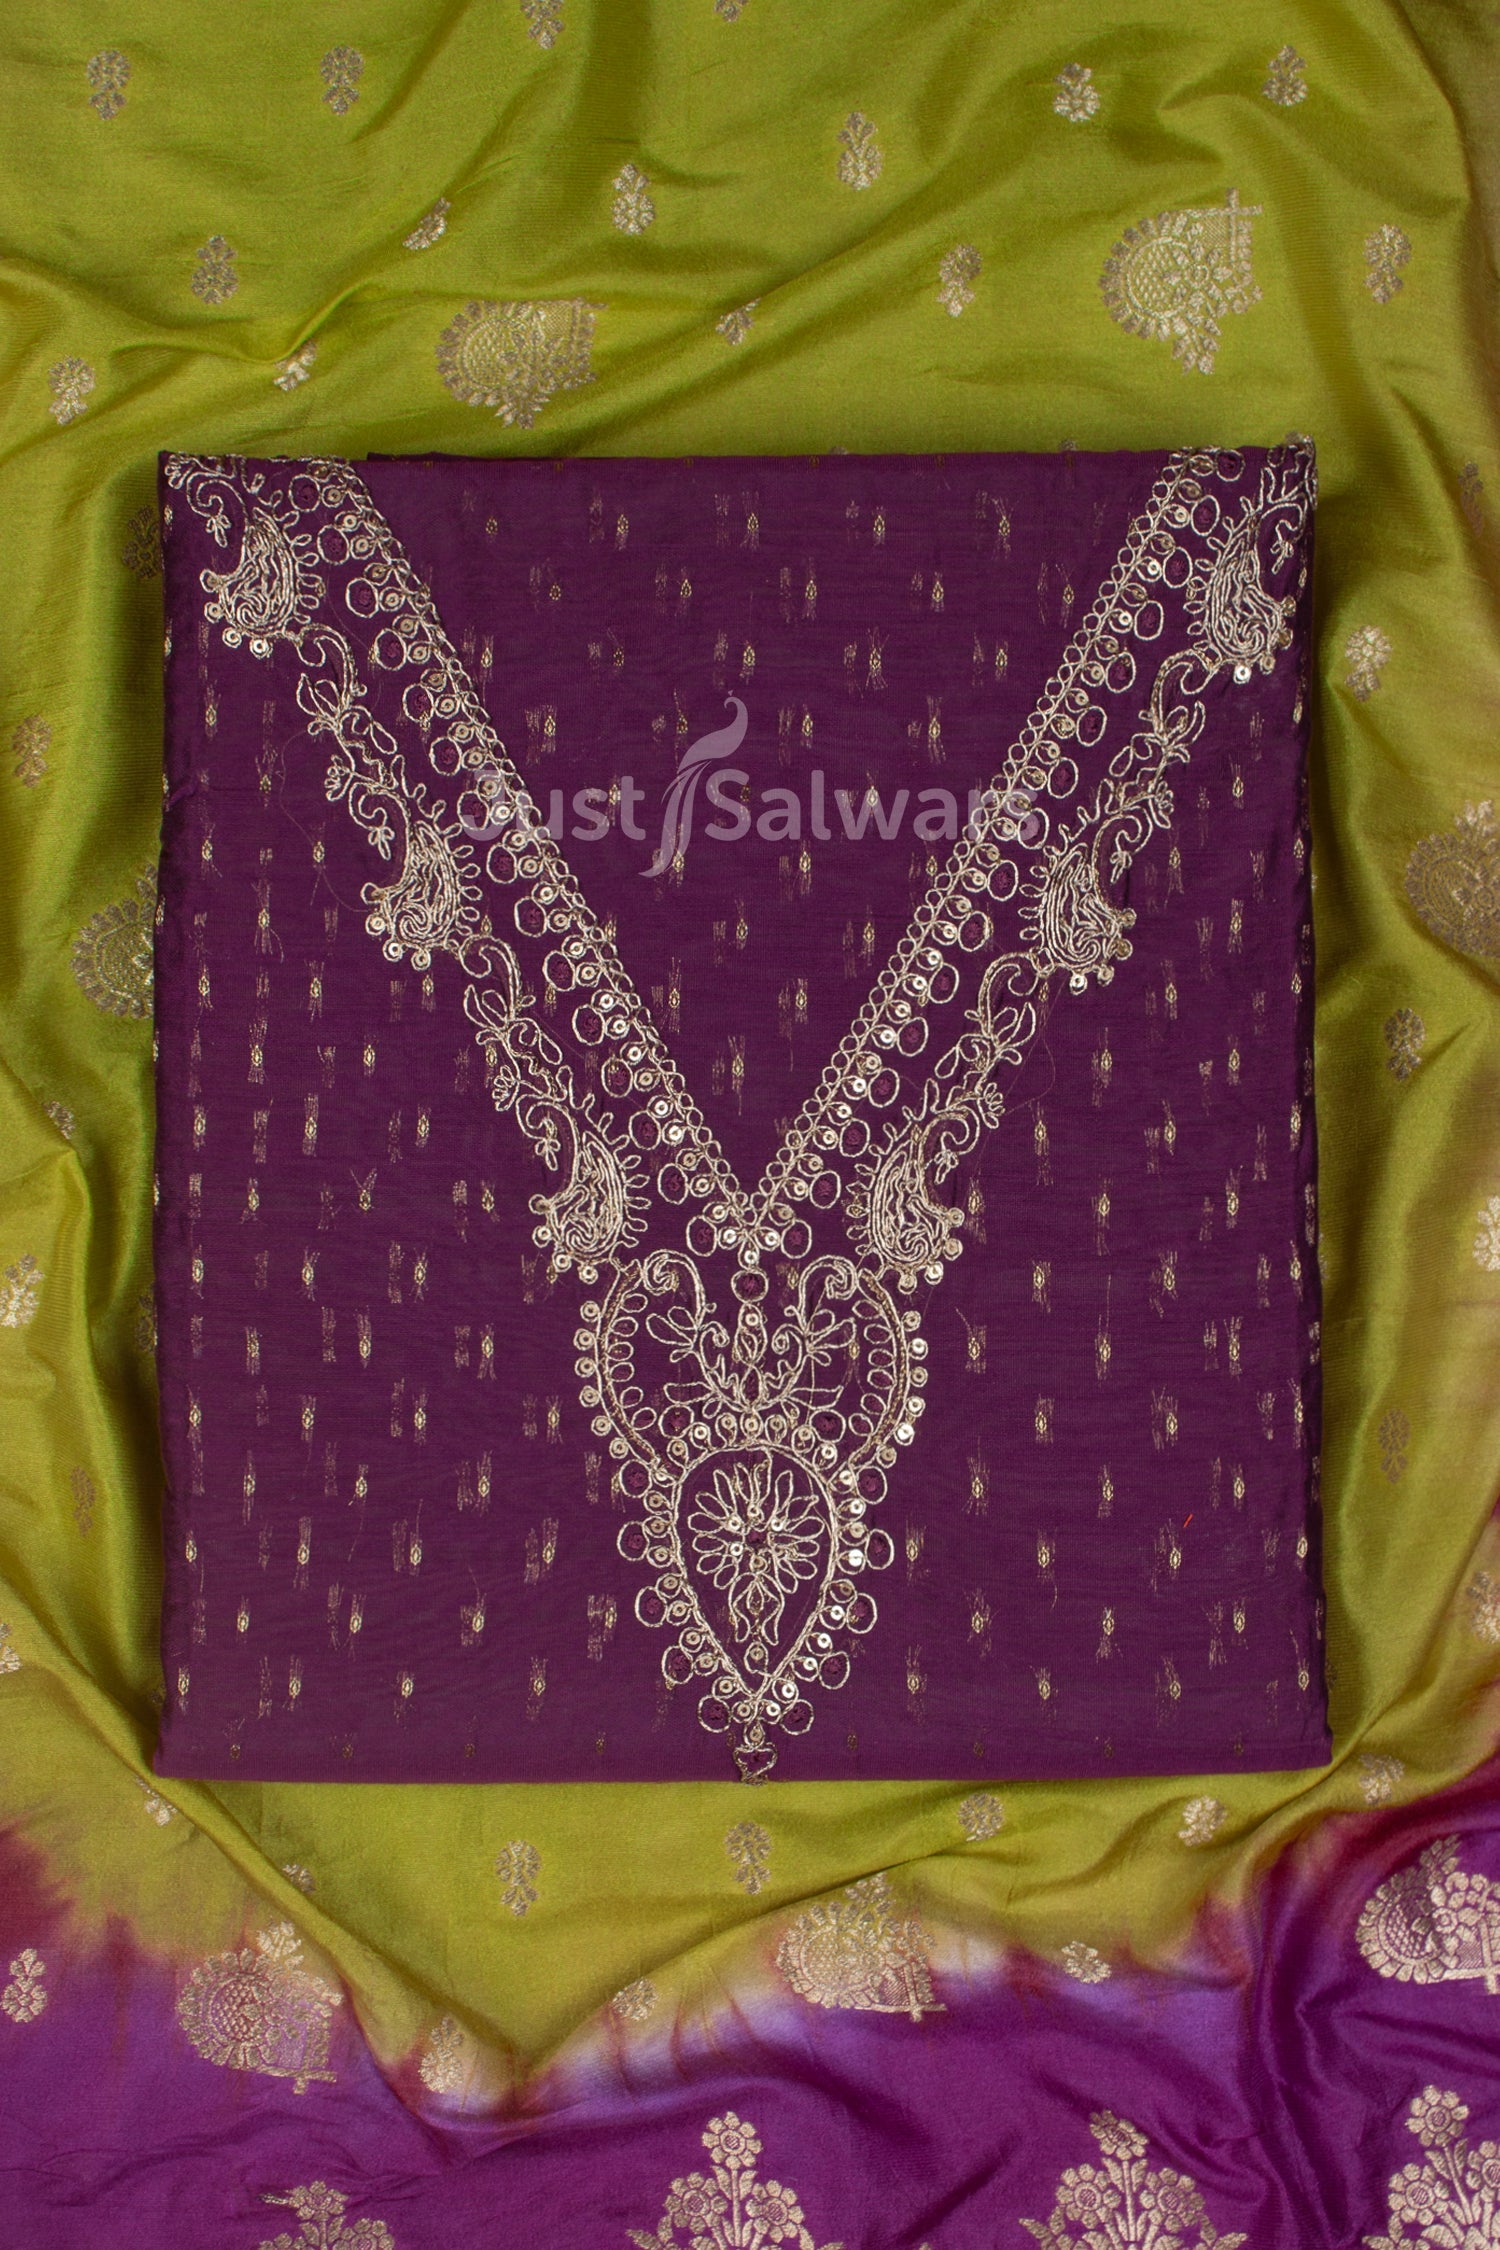 Purple Colour Silk Cotton Dress Material with Silk Dupatta -Dress Material- Just Salwars